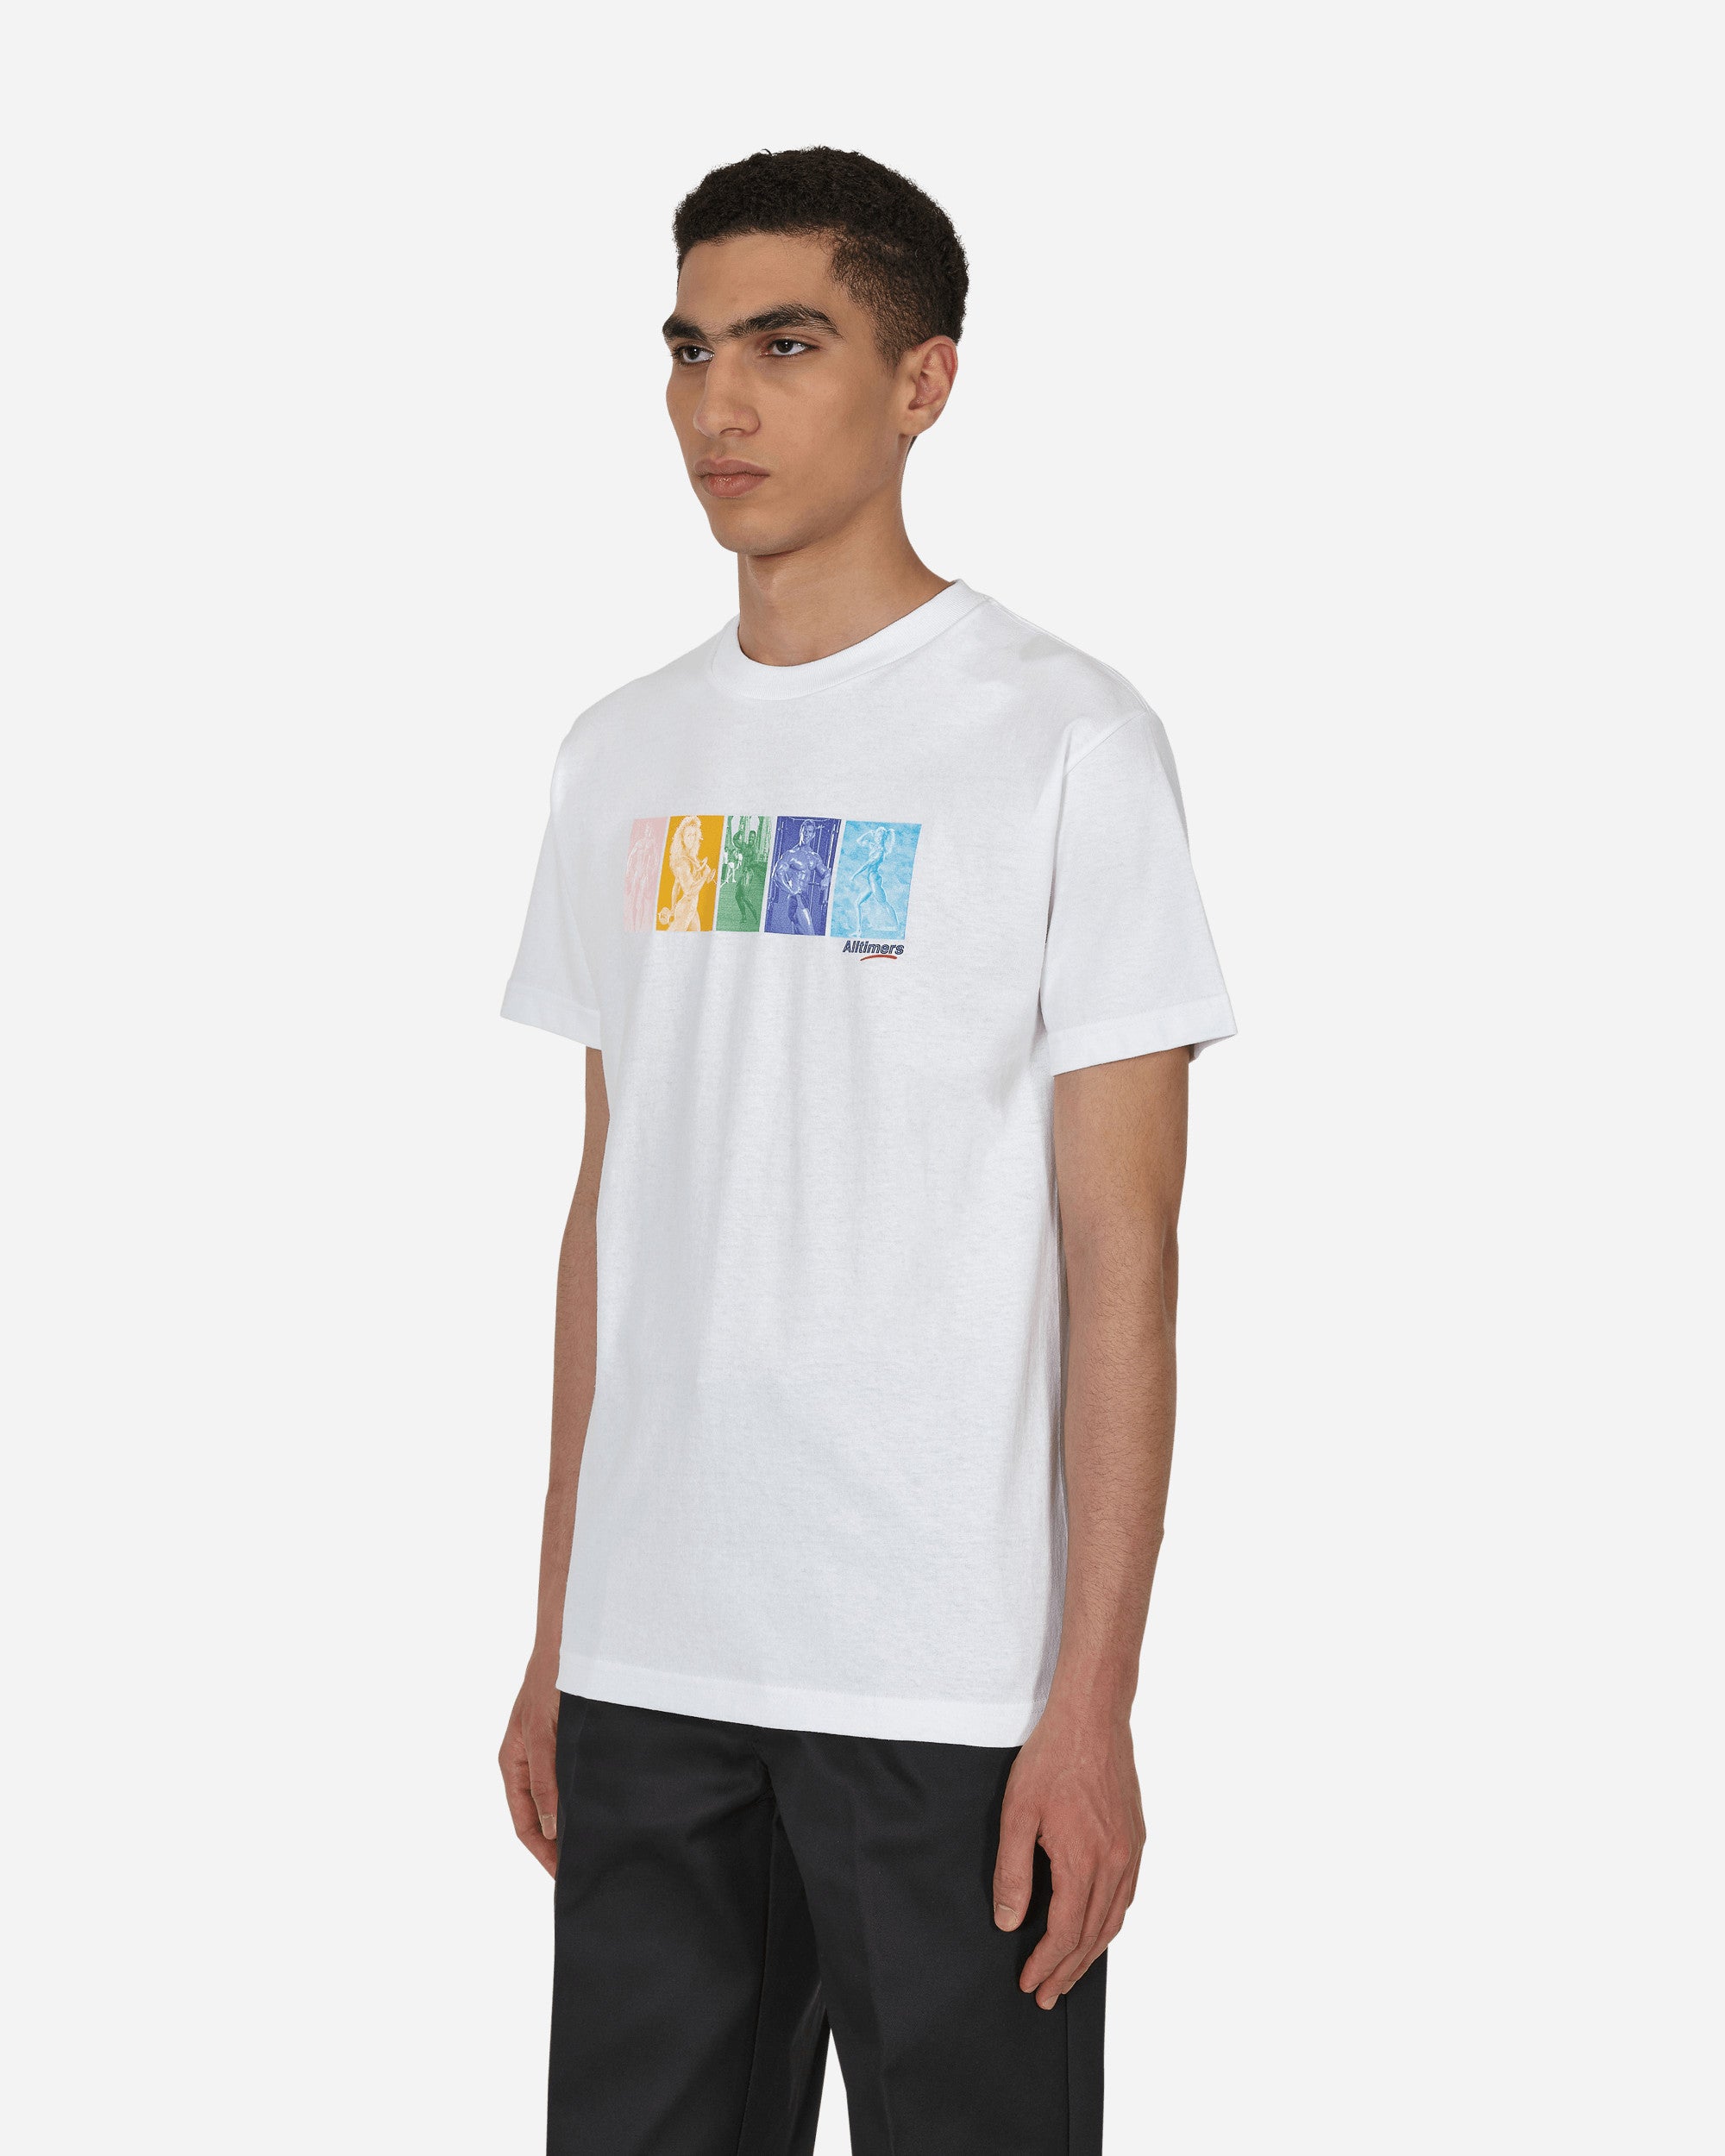 Alltimers Flex T-Shirt White Shirts Shortsleeve PN1726 001